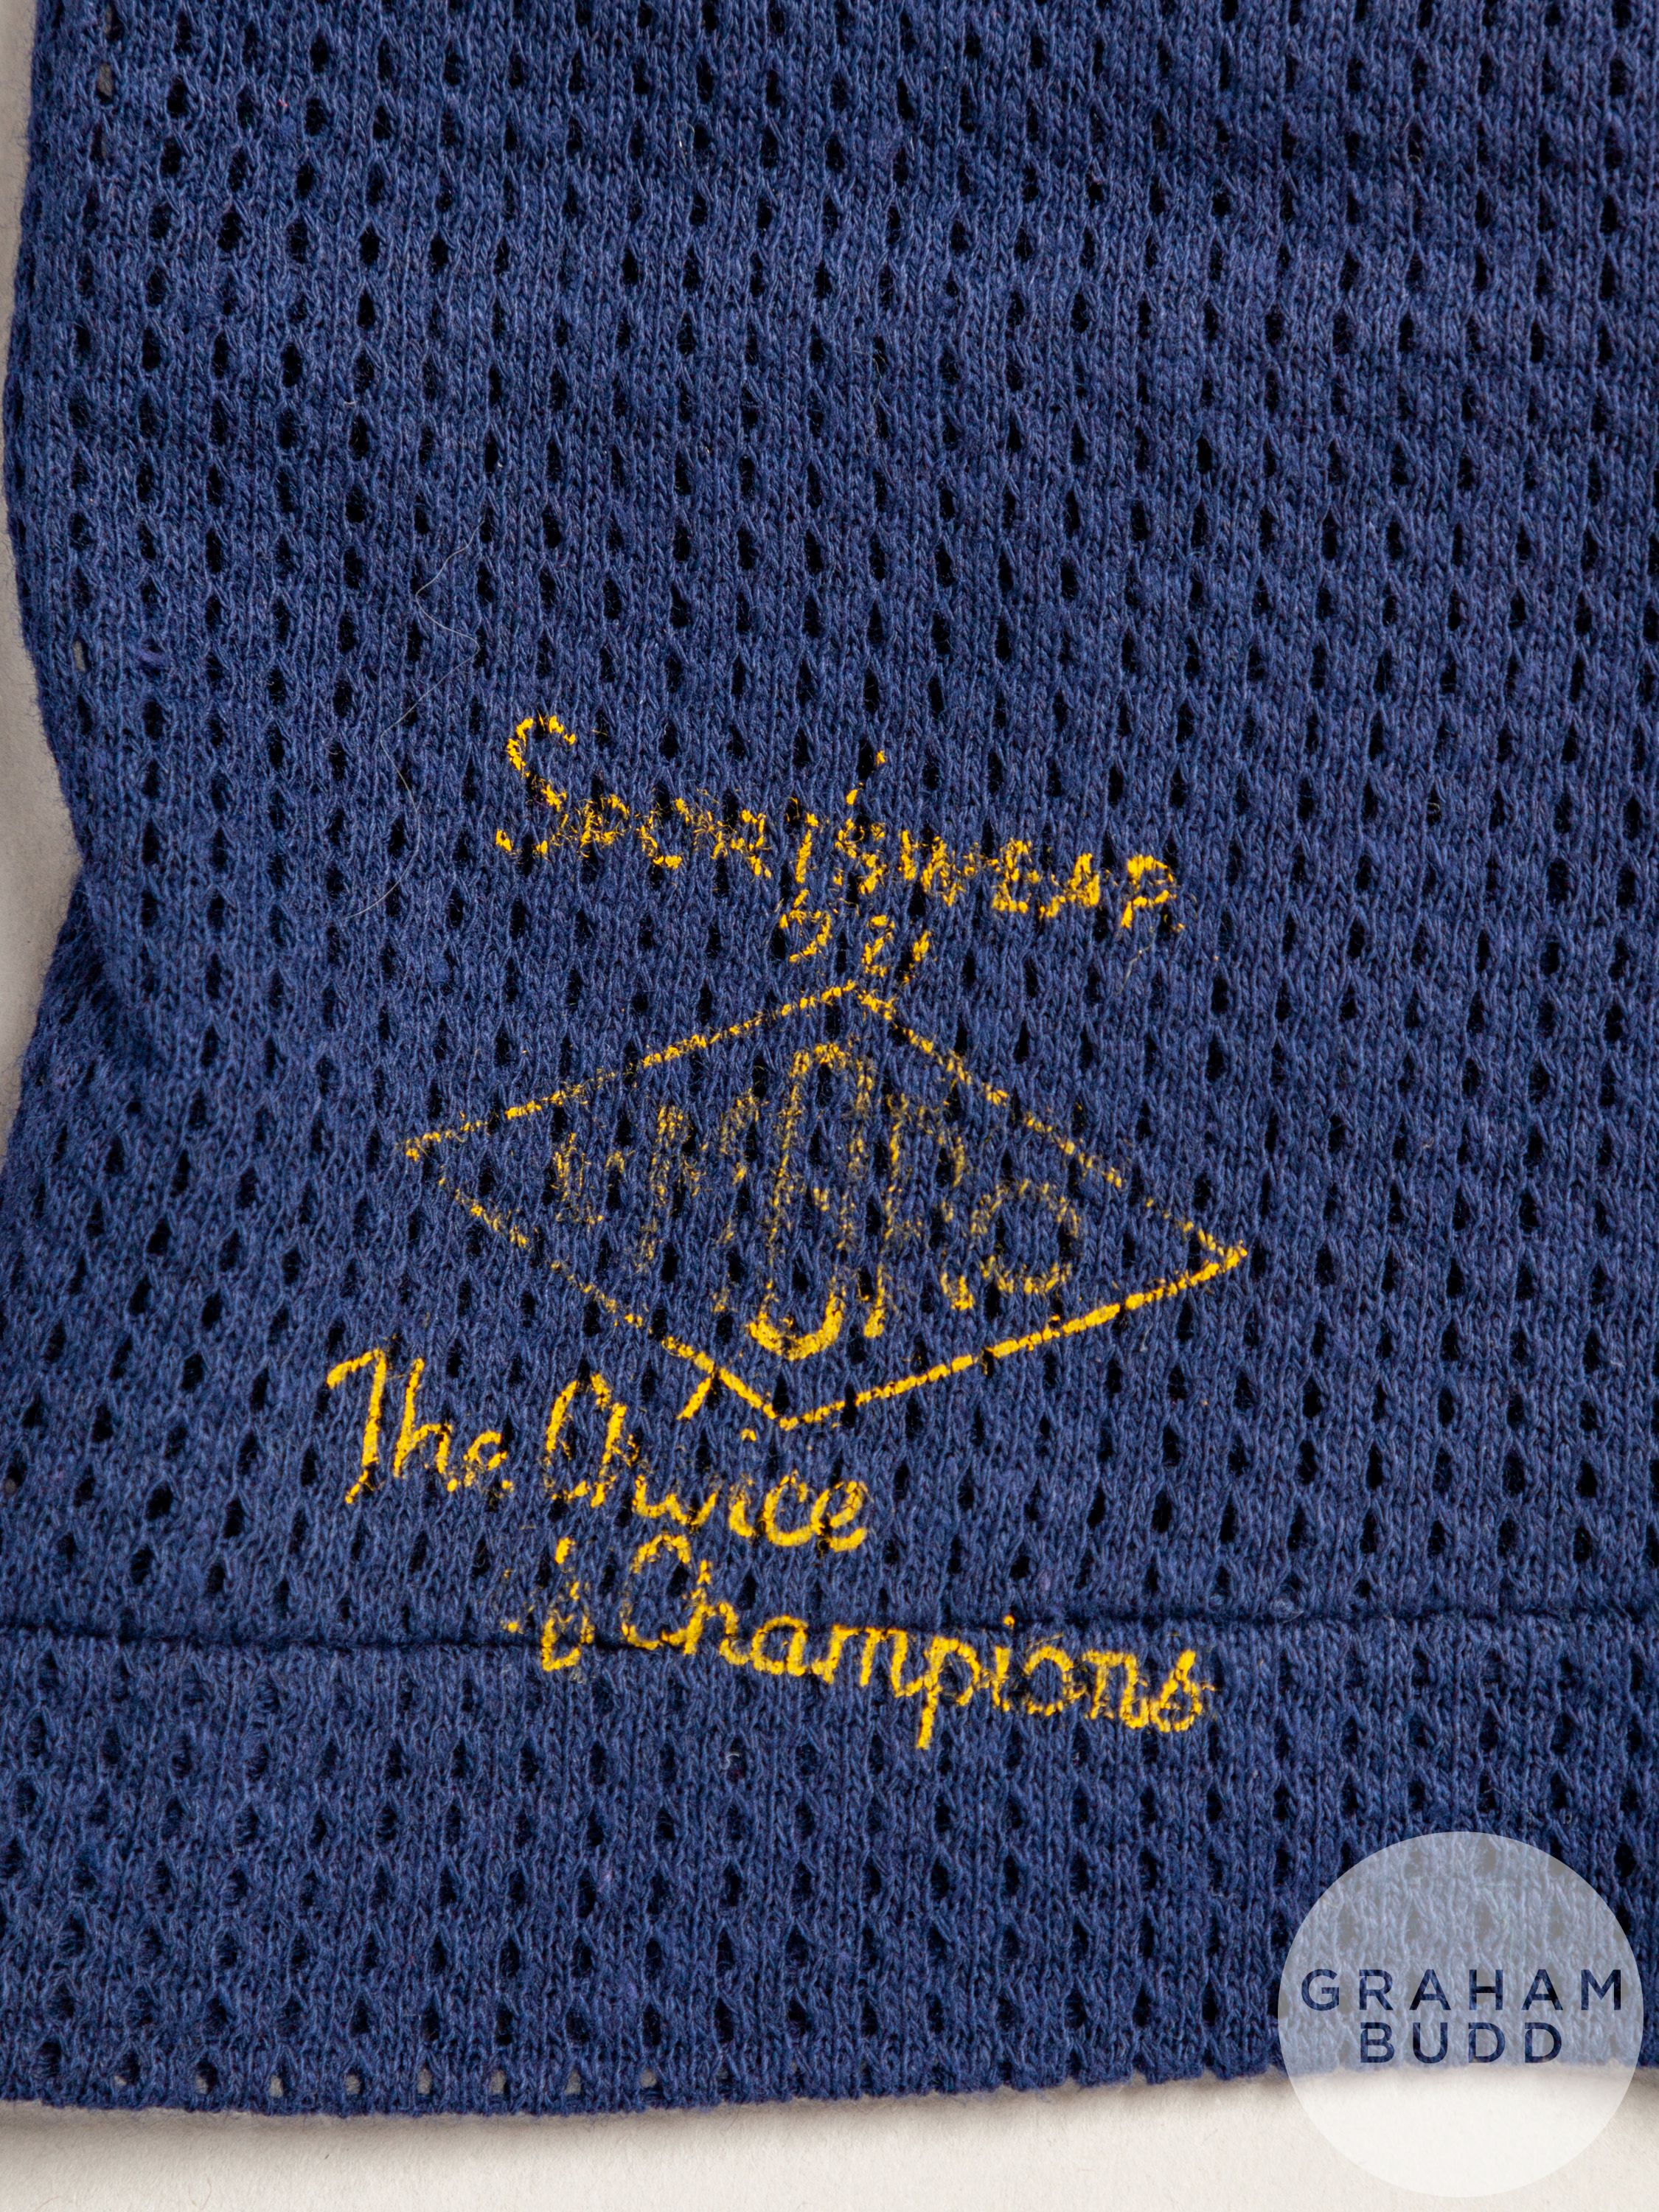 An official blue airtex Scotland 1978 World Cup short-sleeved shirt - Image 4 of 6